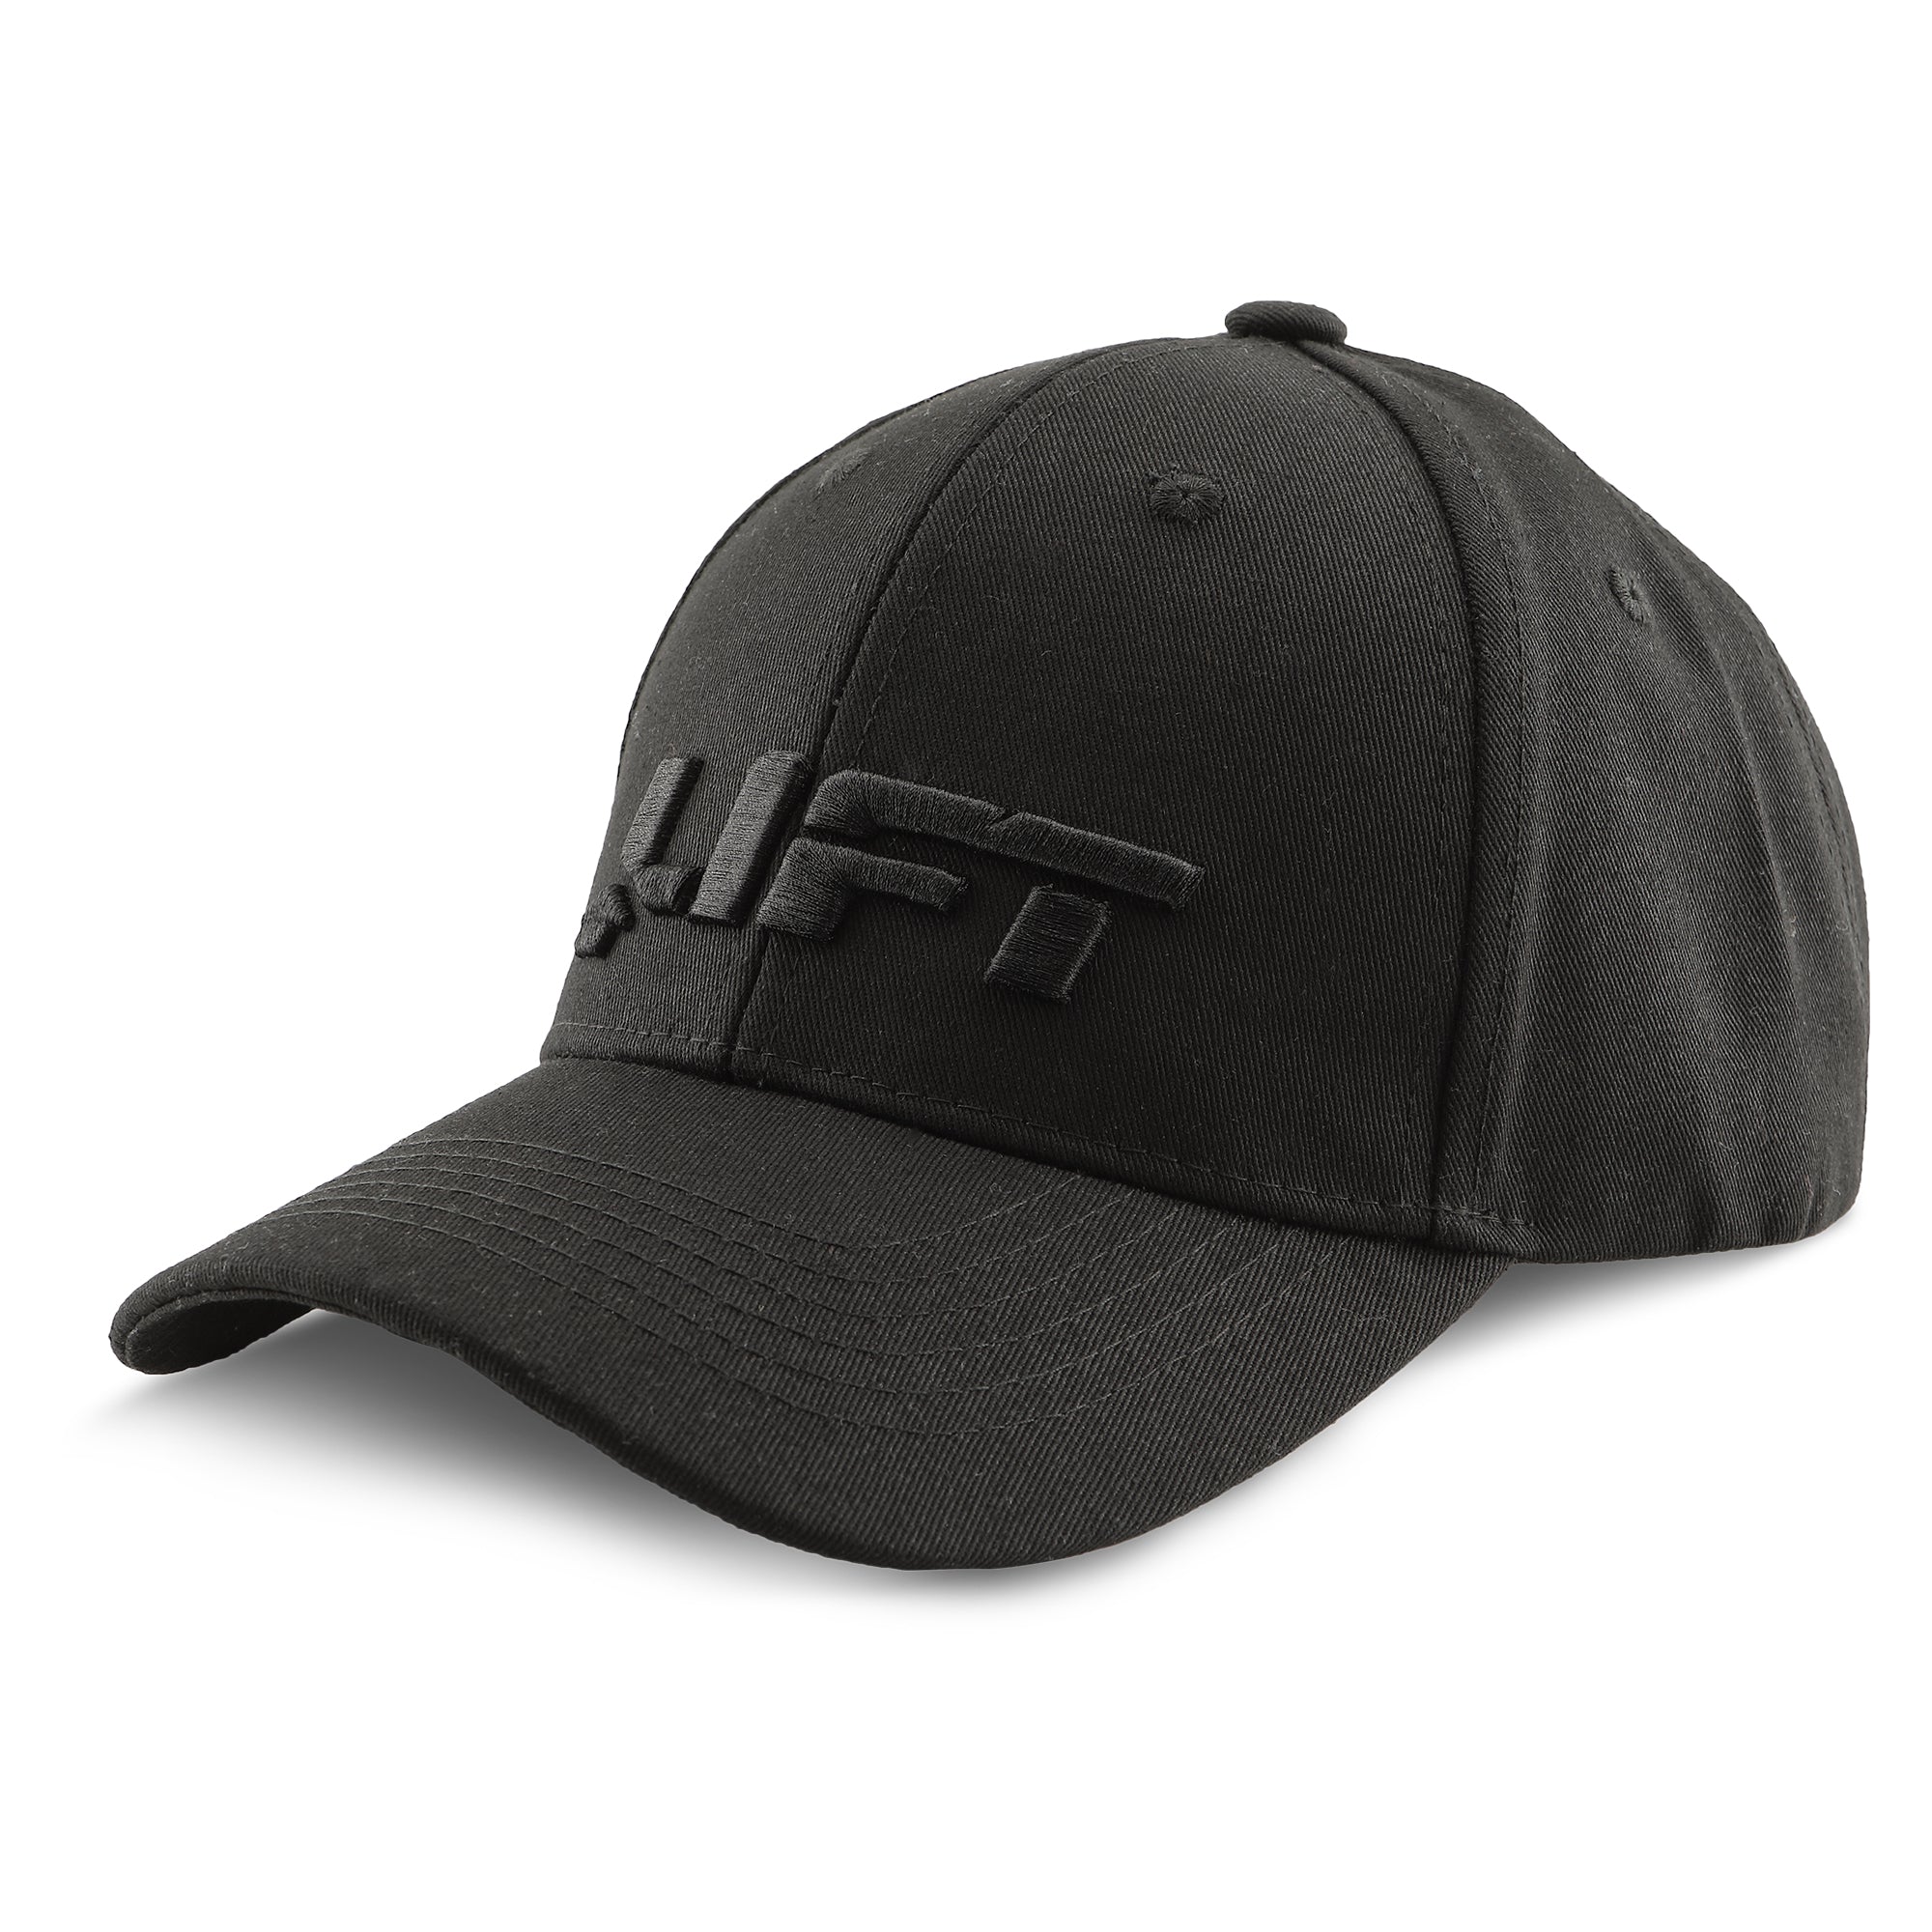 Corp Lift Hat